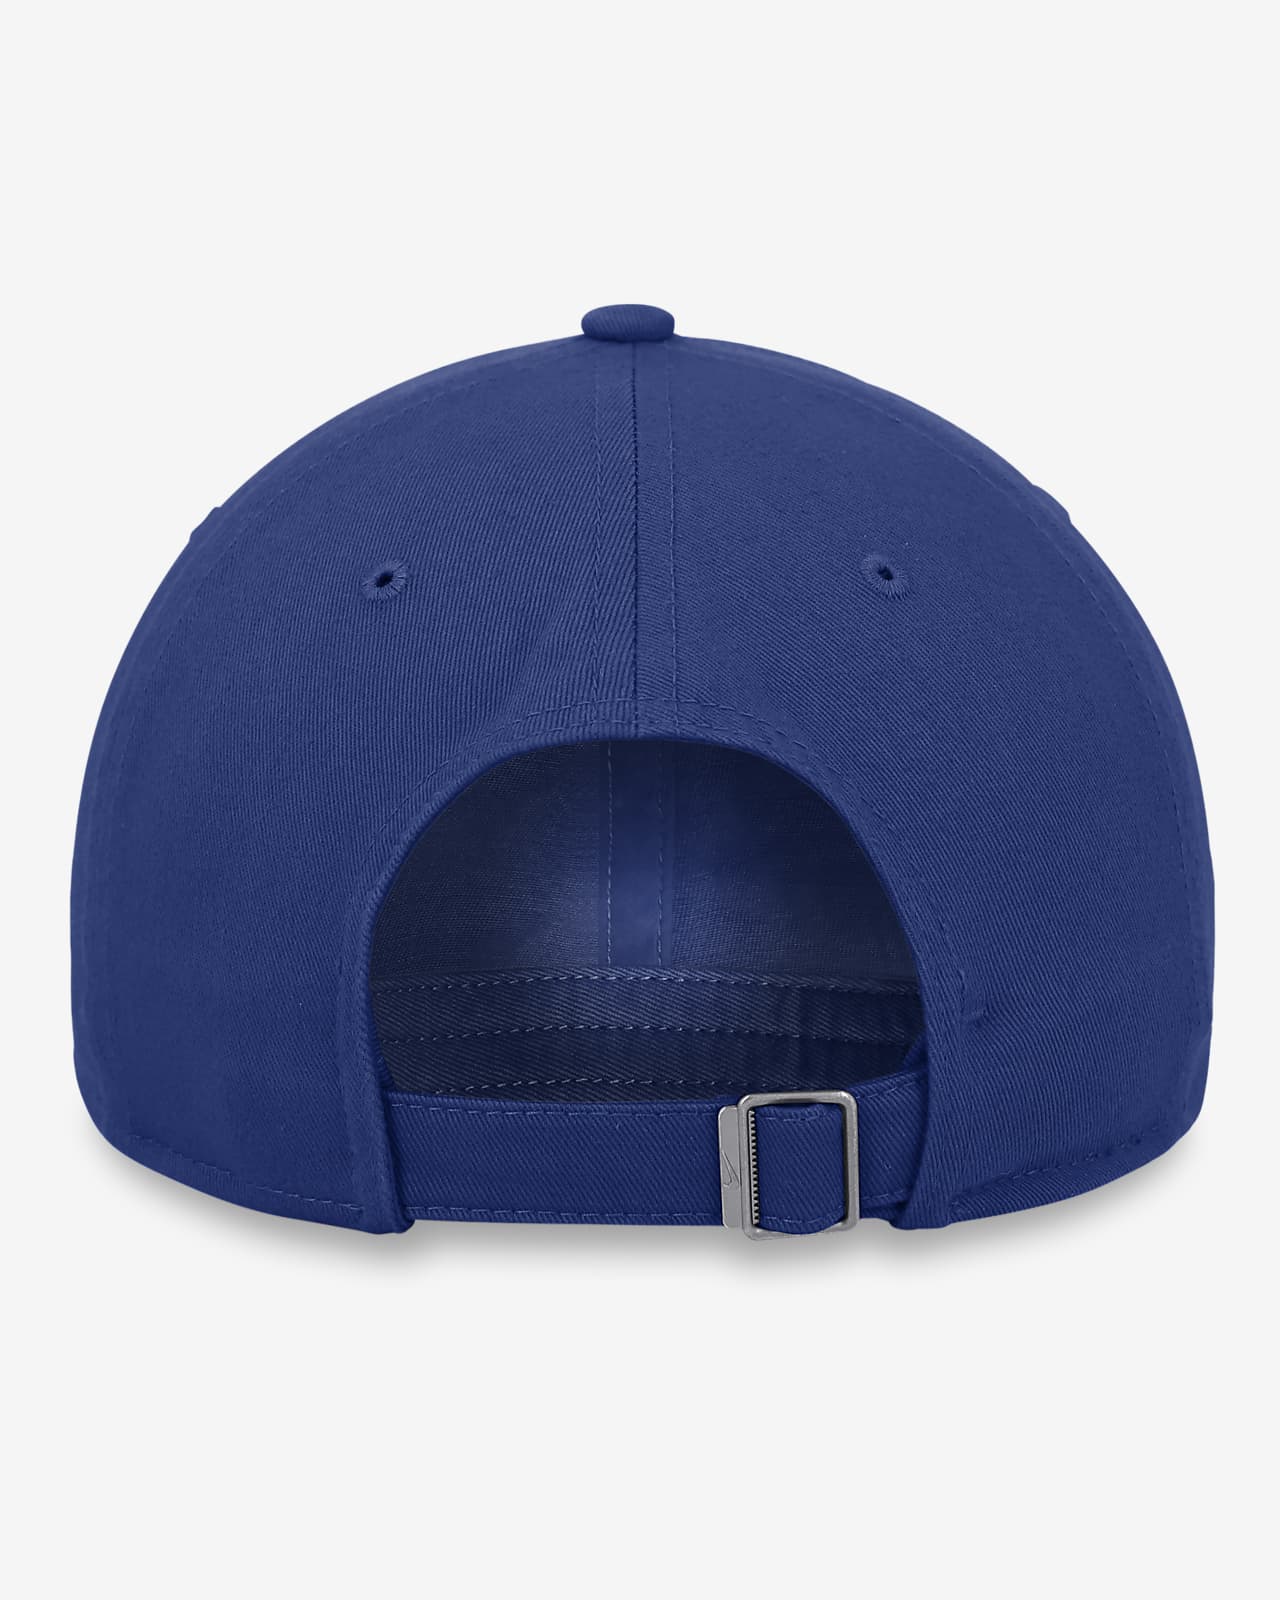 Atlanta Braves Heritage86 Men's Nike MLB Adjustable Hat